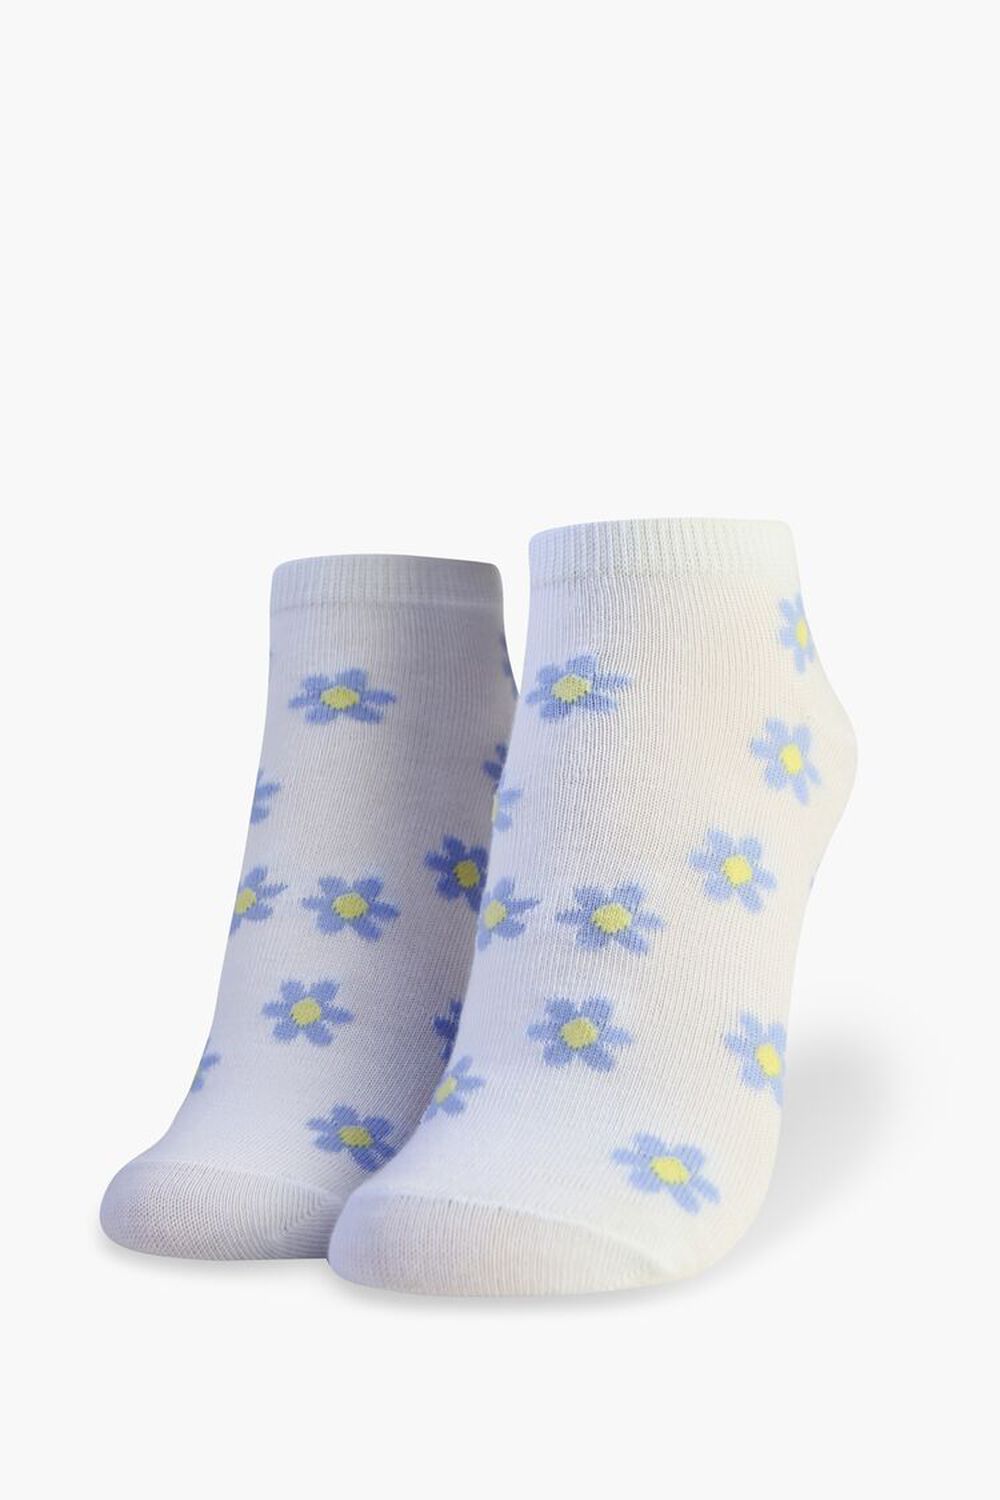 WHITE/BLUE Floral Print Ankle Socks, image 1